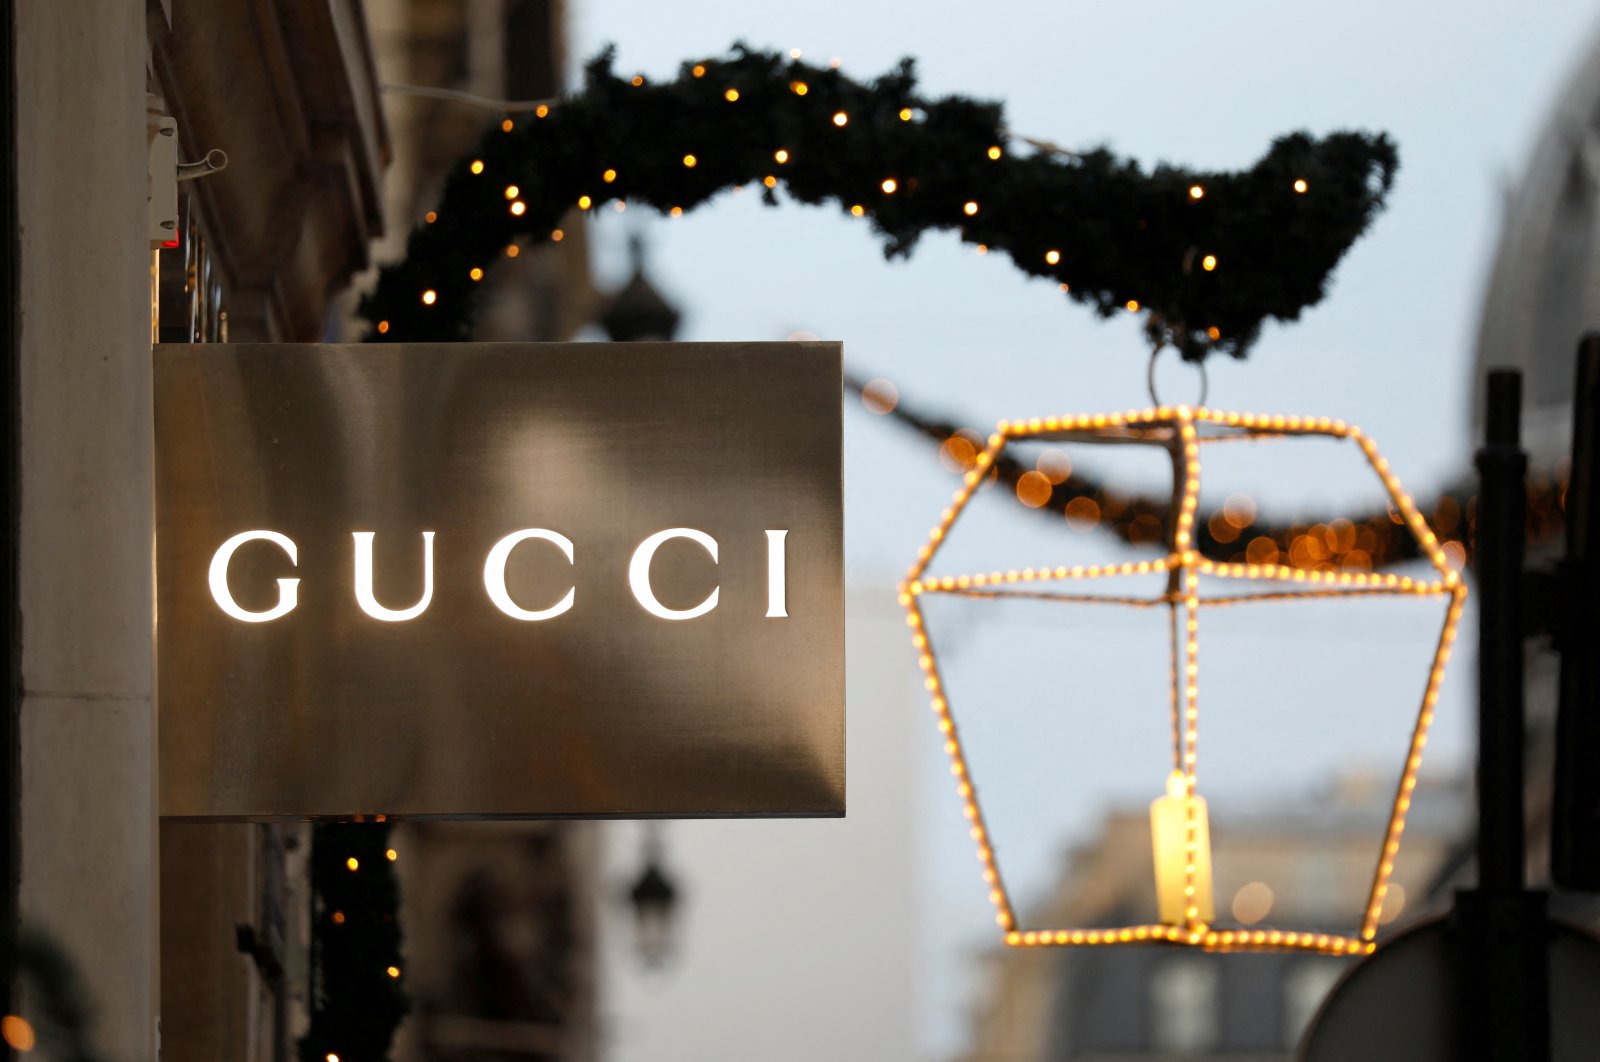 A Gucci sign is seen outside a shop in Paris, France, Dec., 18, 2017. (Reuters Photo)